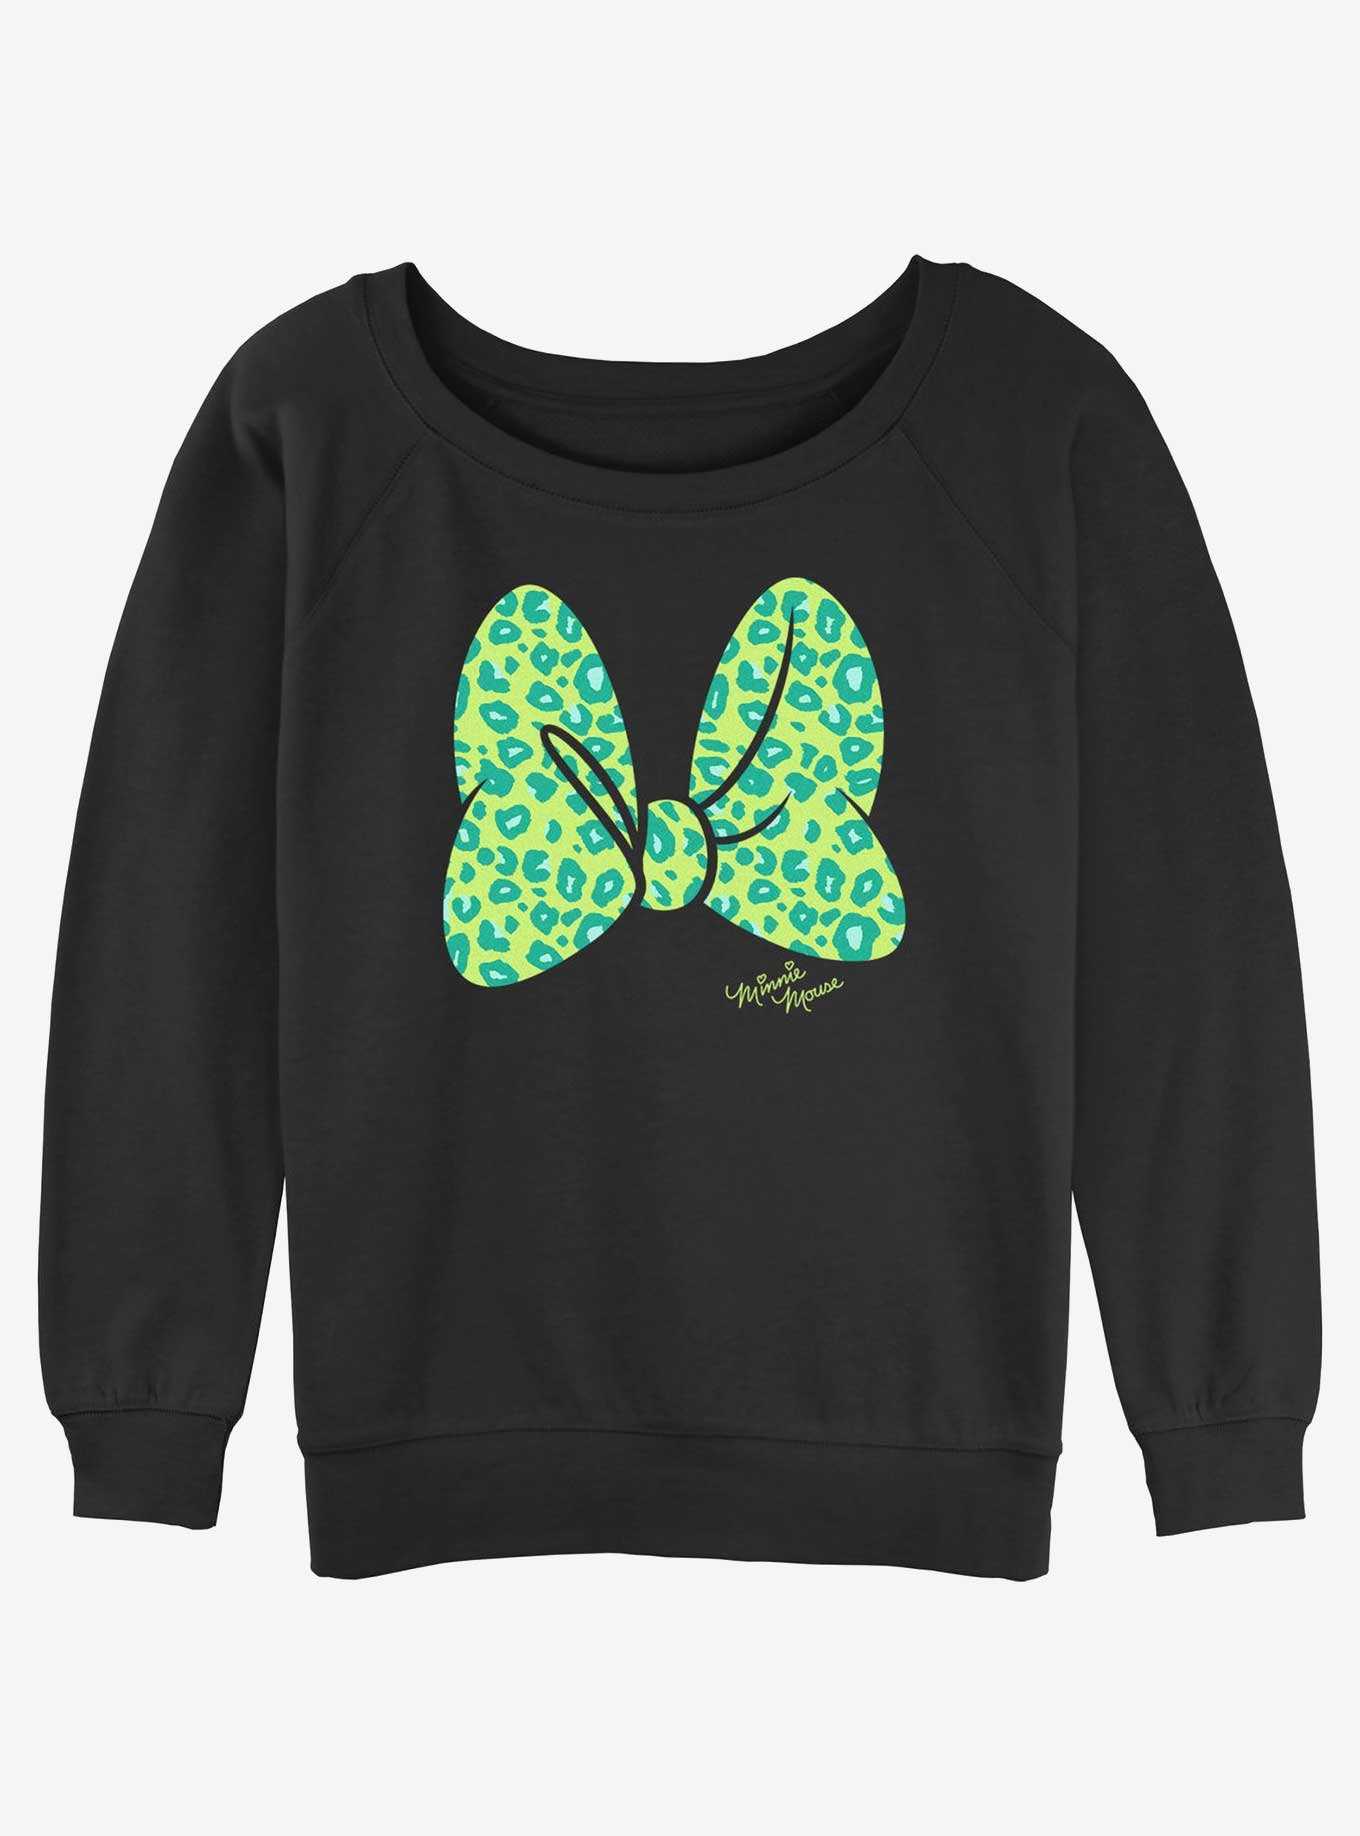 Disney Minnie Mouse green Animal Print Bow Girls Slouchy Sweatshirt, , hi-res